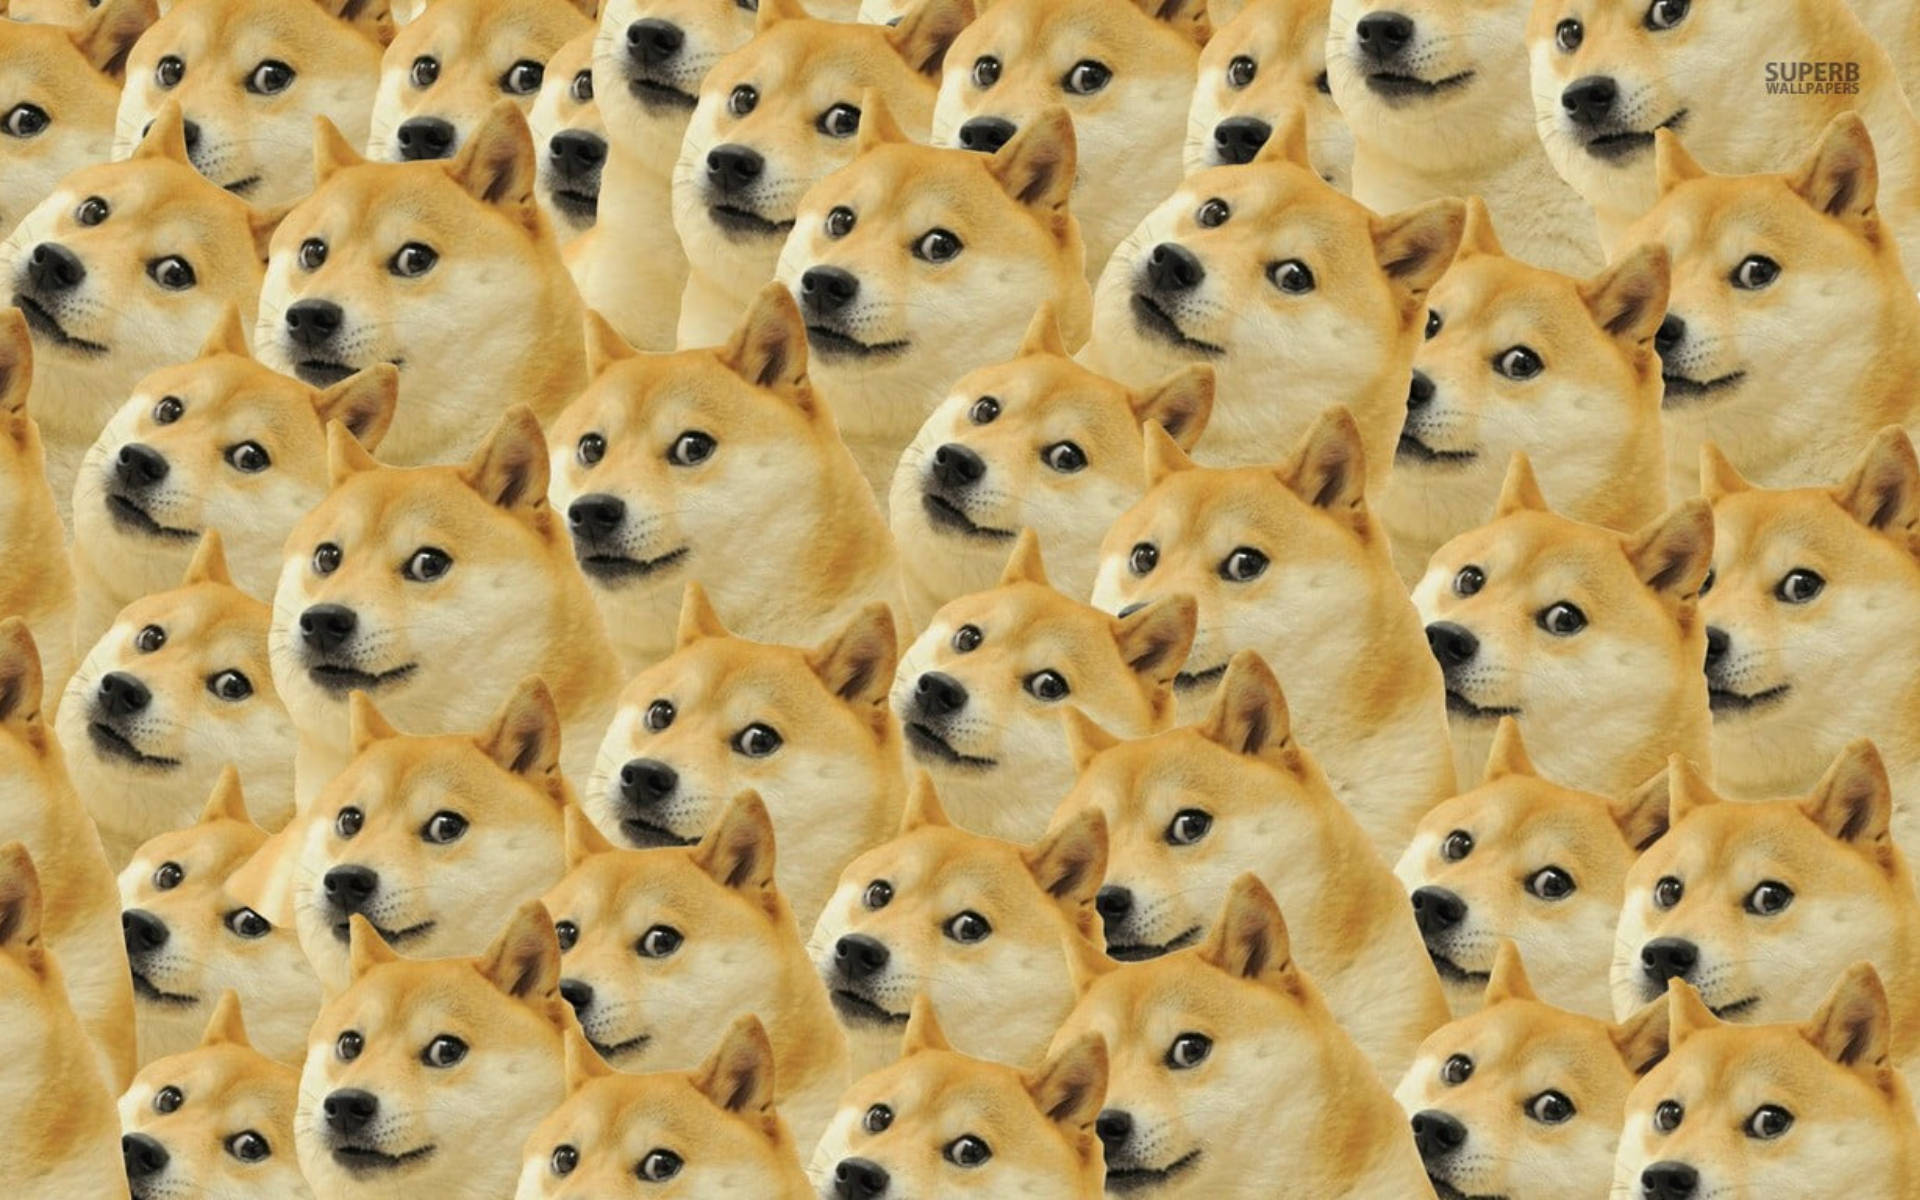 Doge Meme Faces Pattern Wallpaper